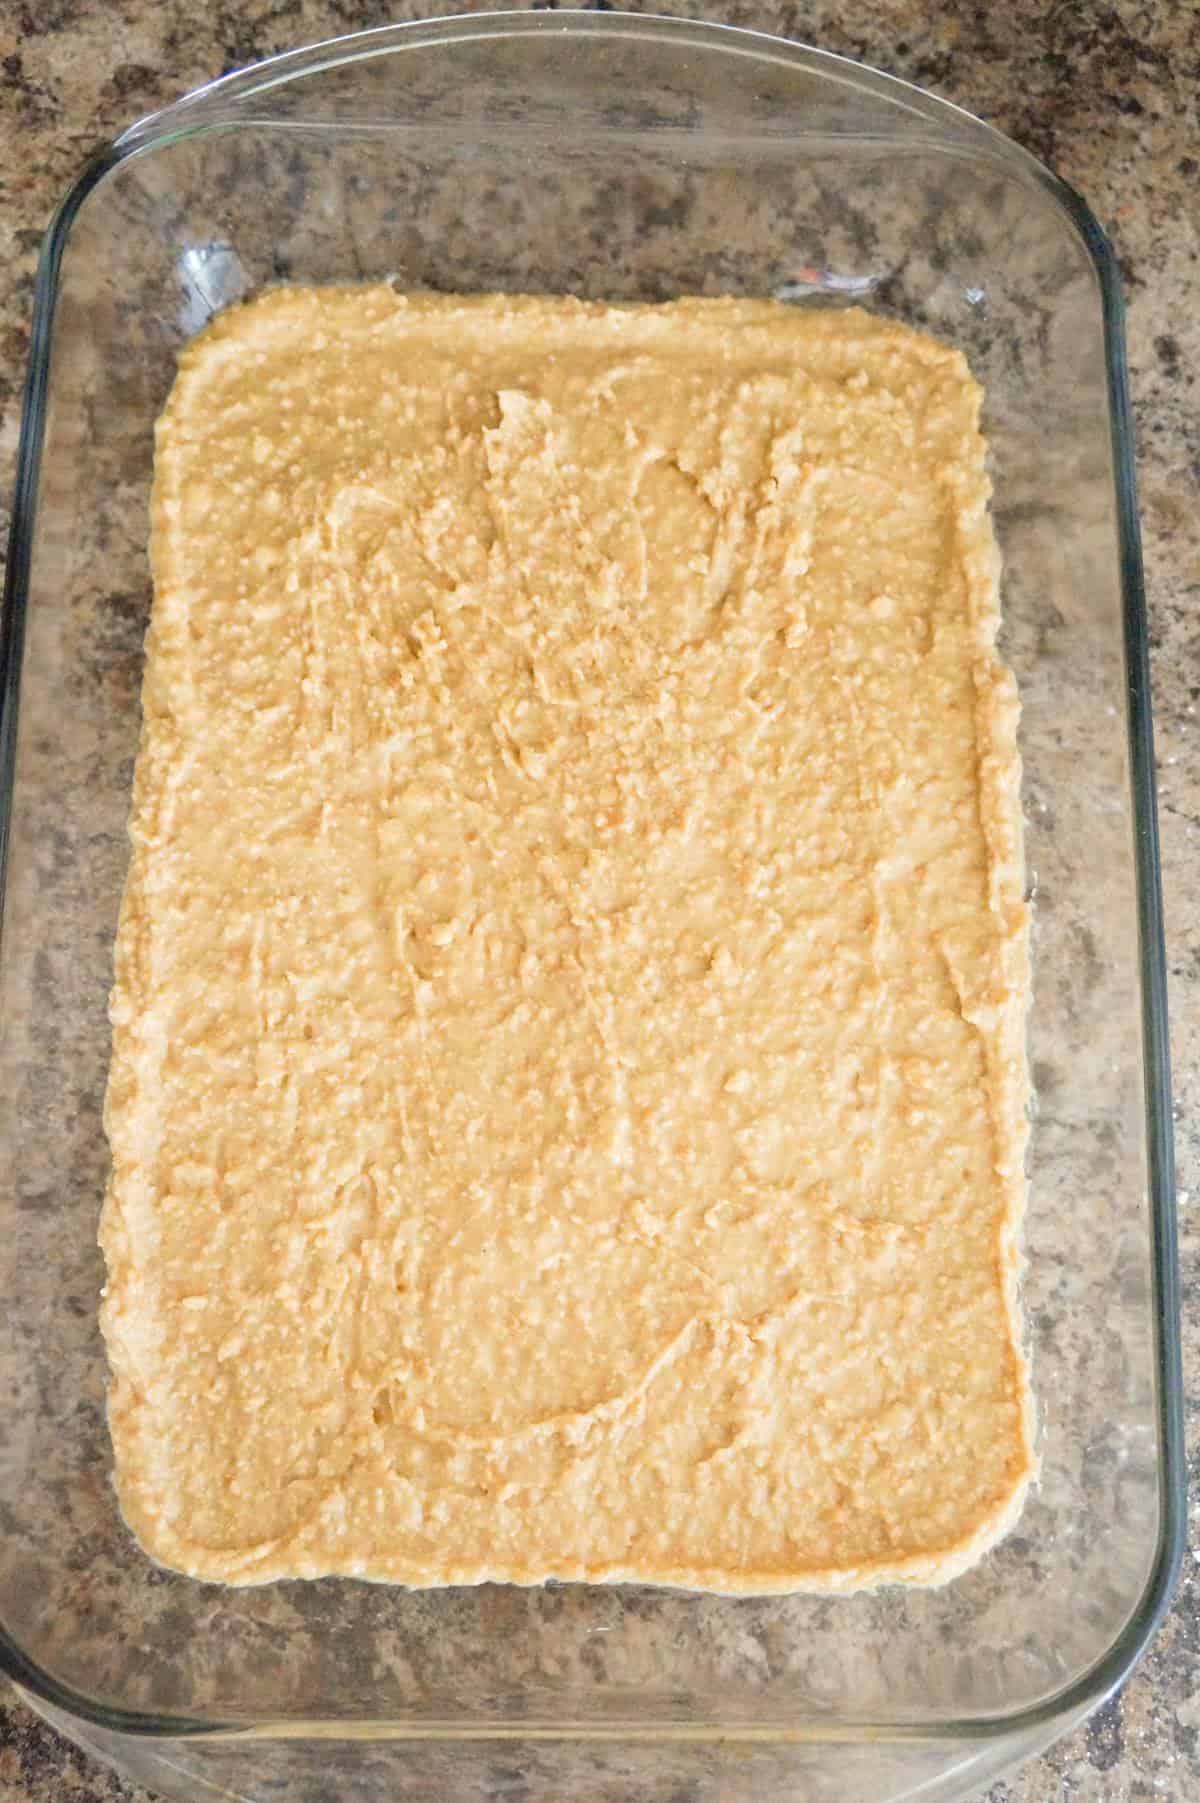 peanut butter and Ritz cracker mixture in a baking dish